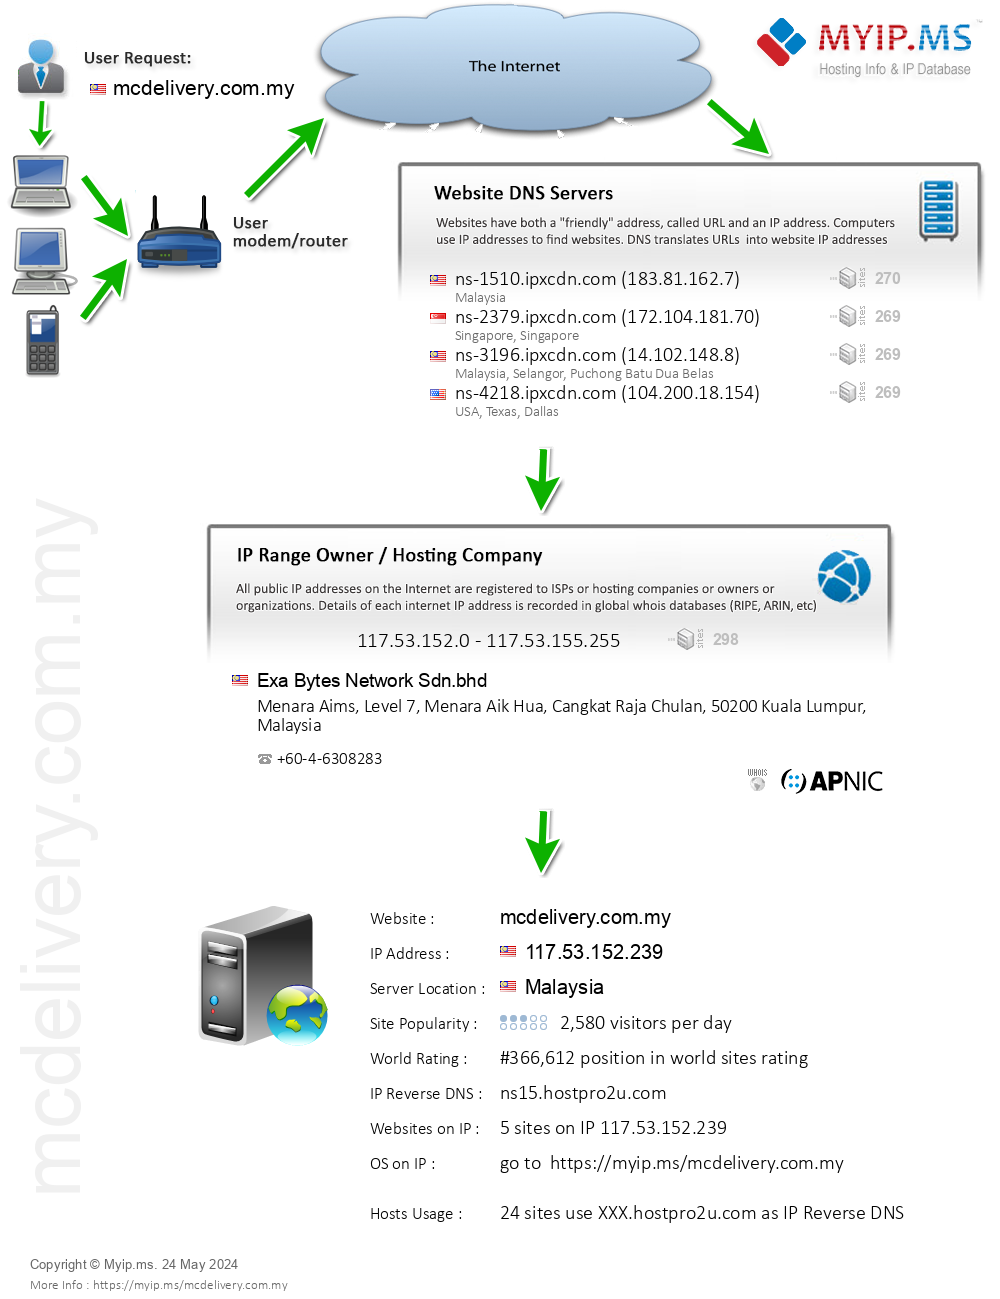 Mcdelivery.com.my - Website Hosting Visual IP Diagram